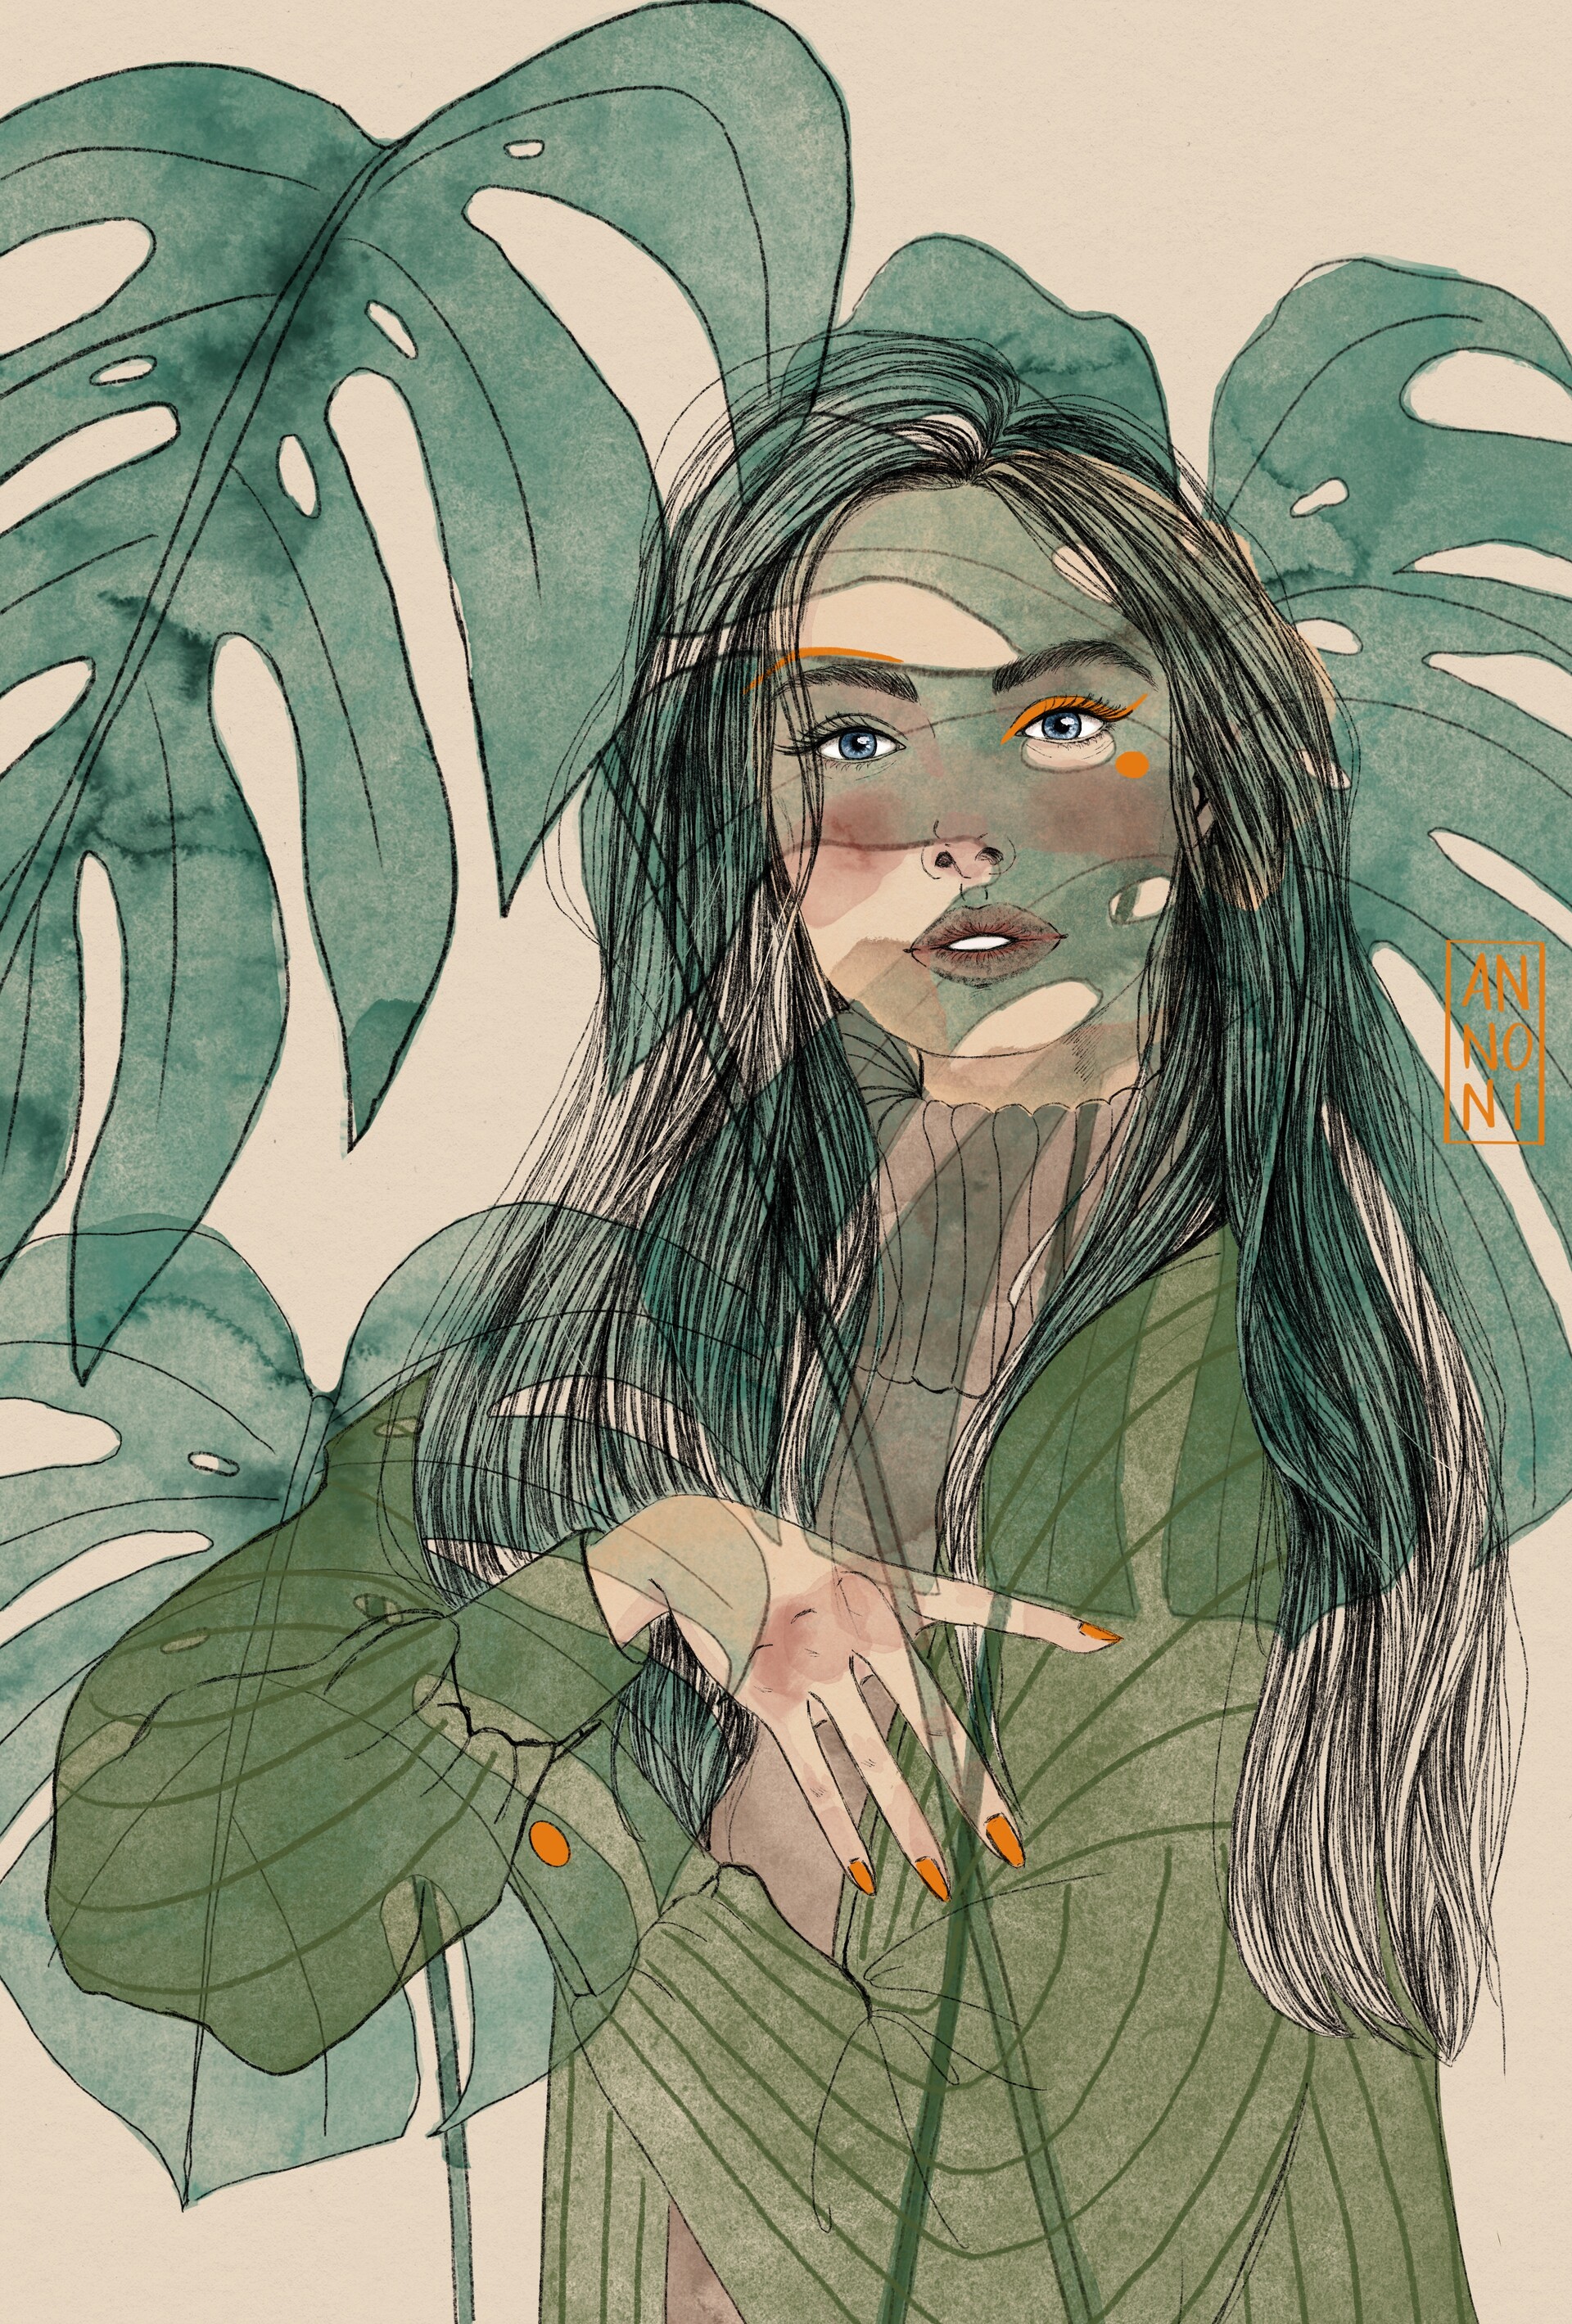 - Watercolor-ish plants and woman